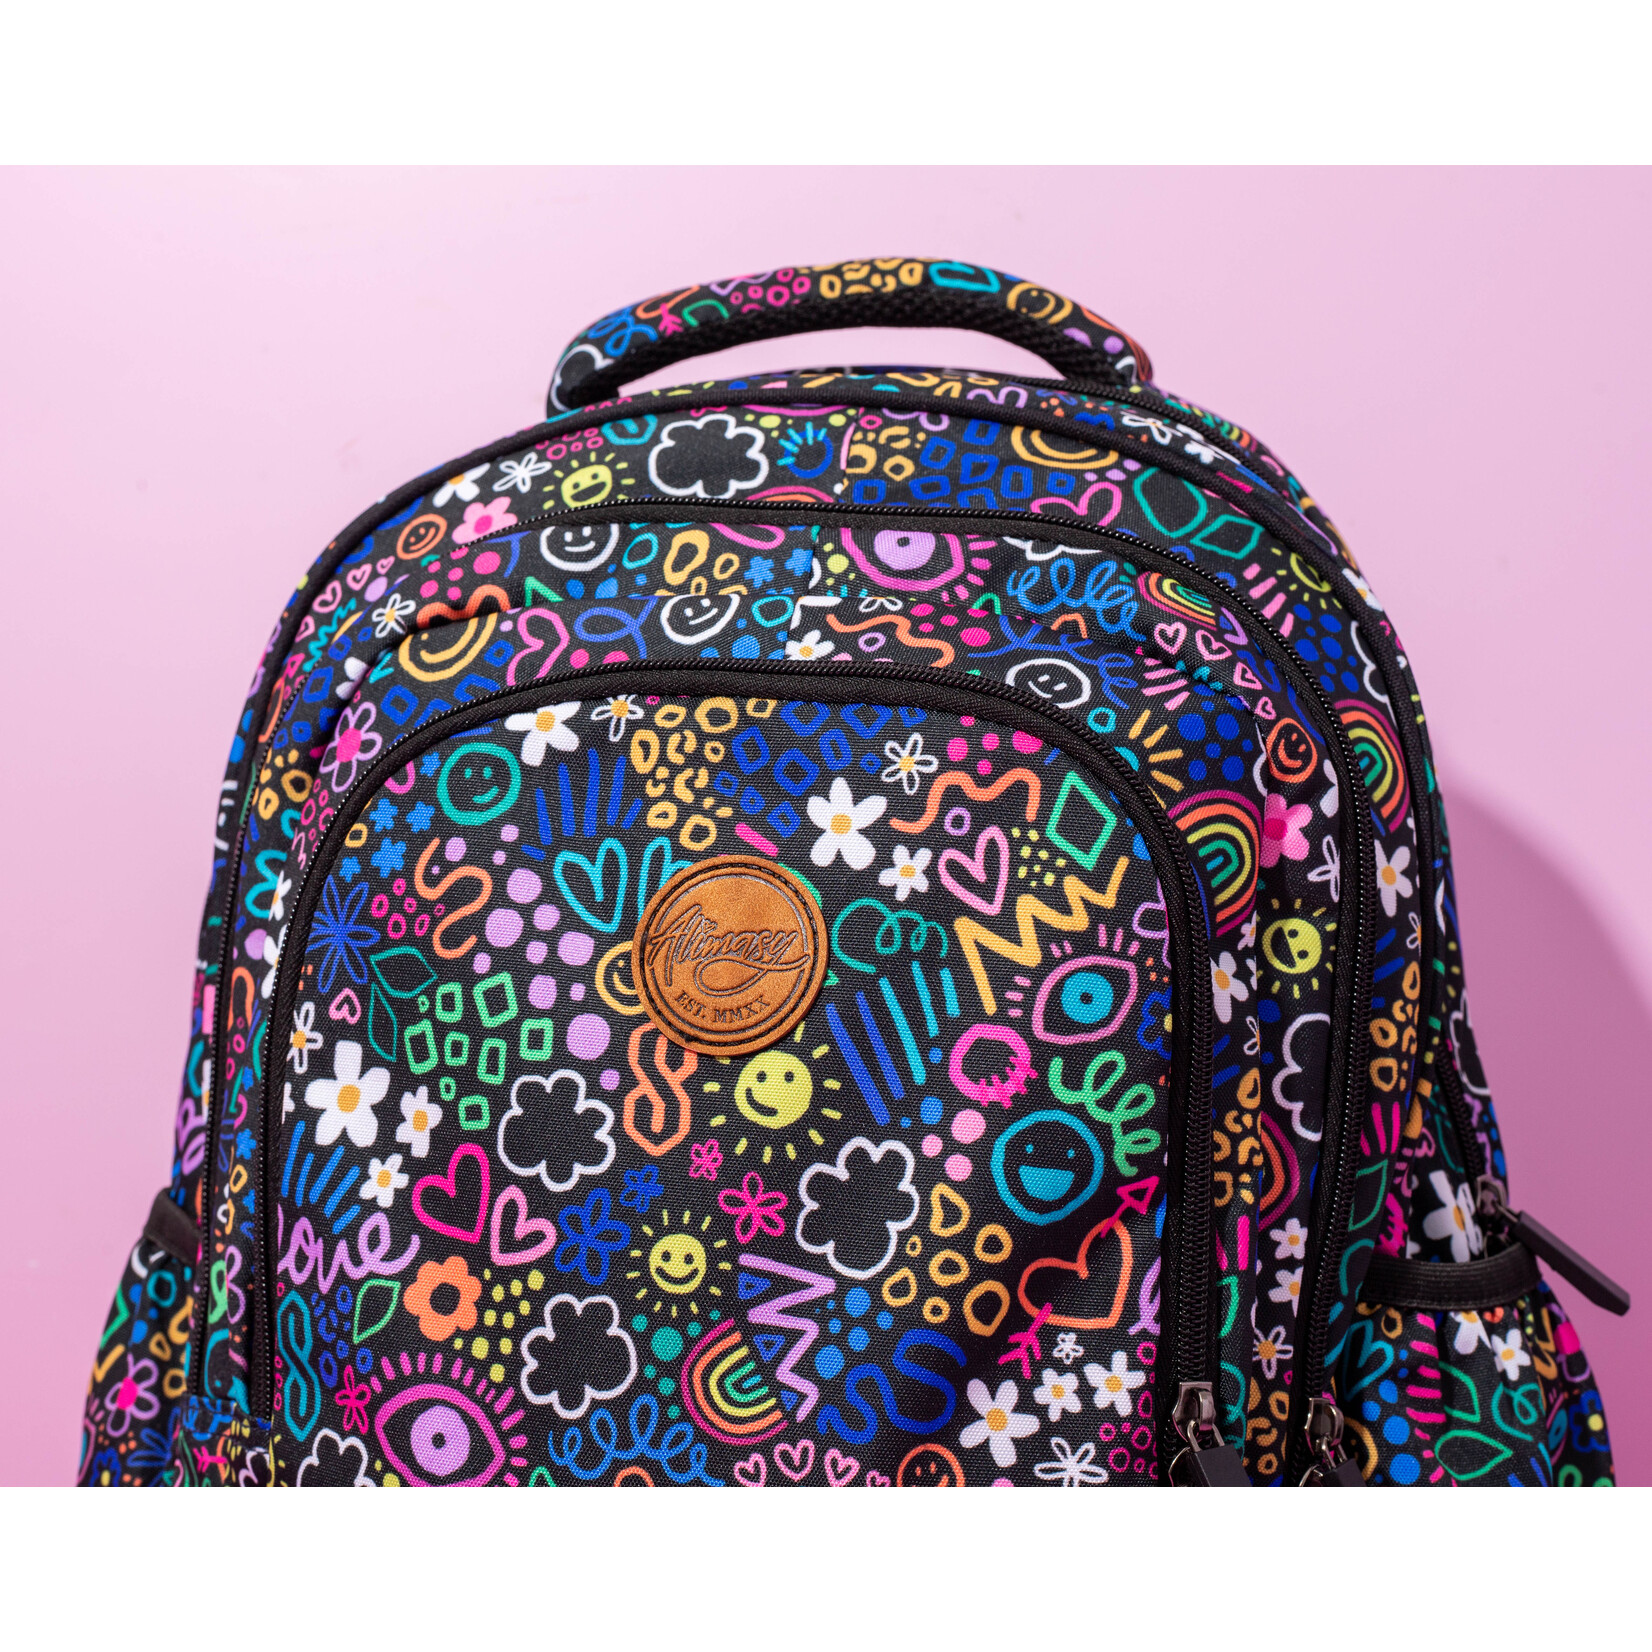 Alimasy Doodle Large School Backpack